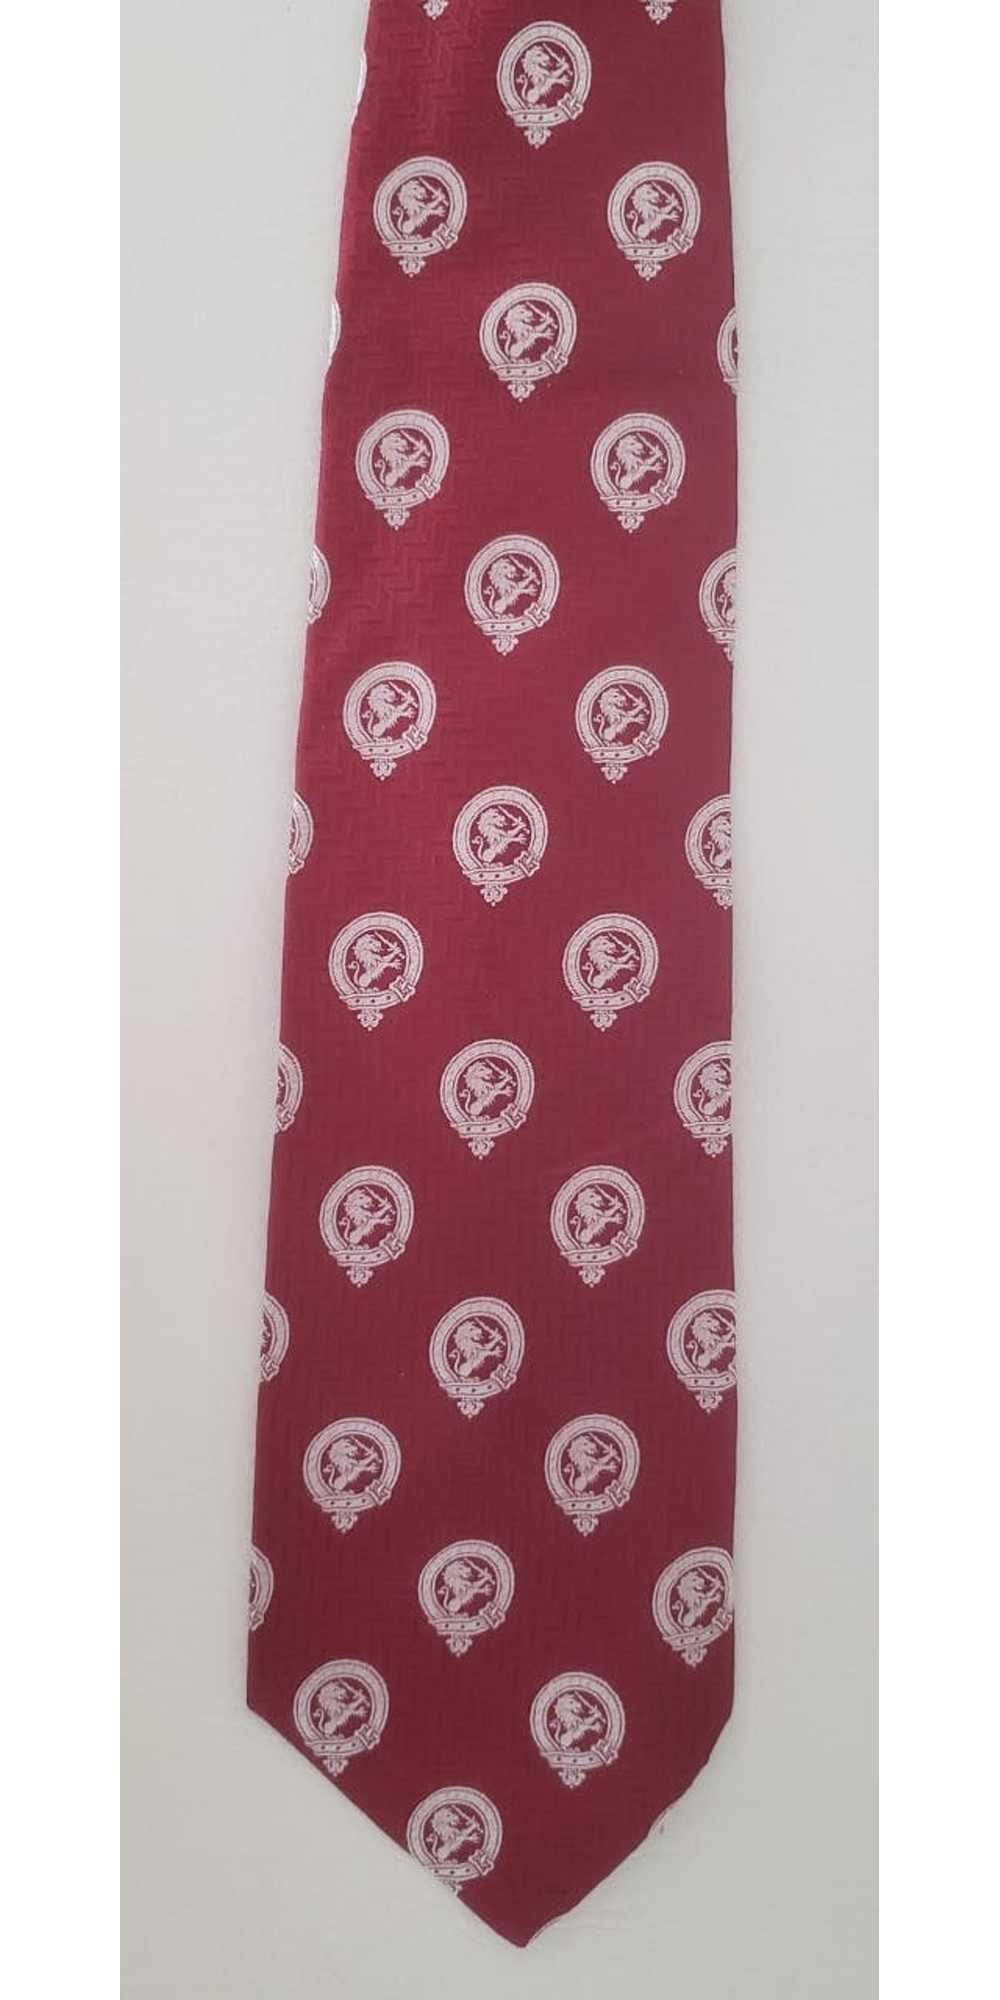 Lanvin Lanvin silk neck tie 1970s red white lions - image 3